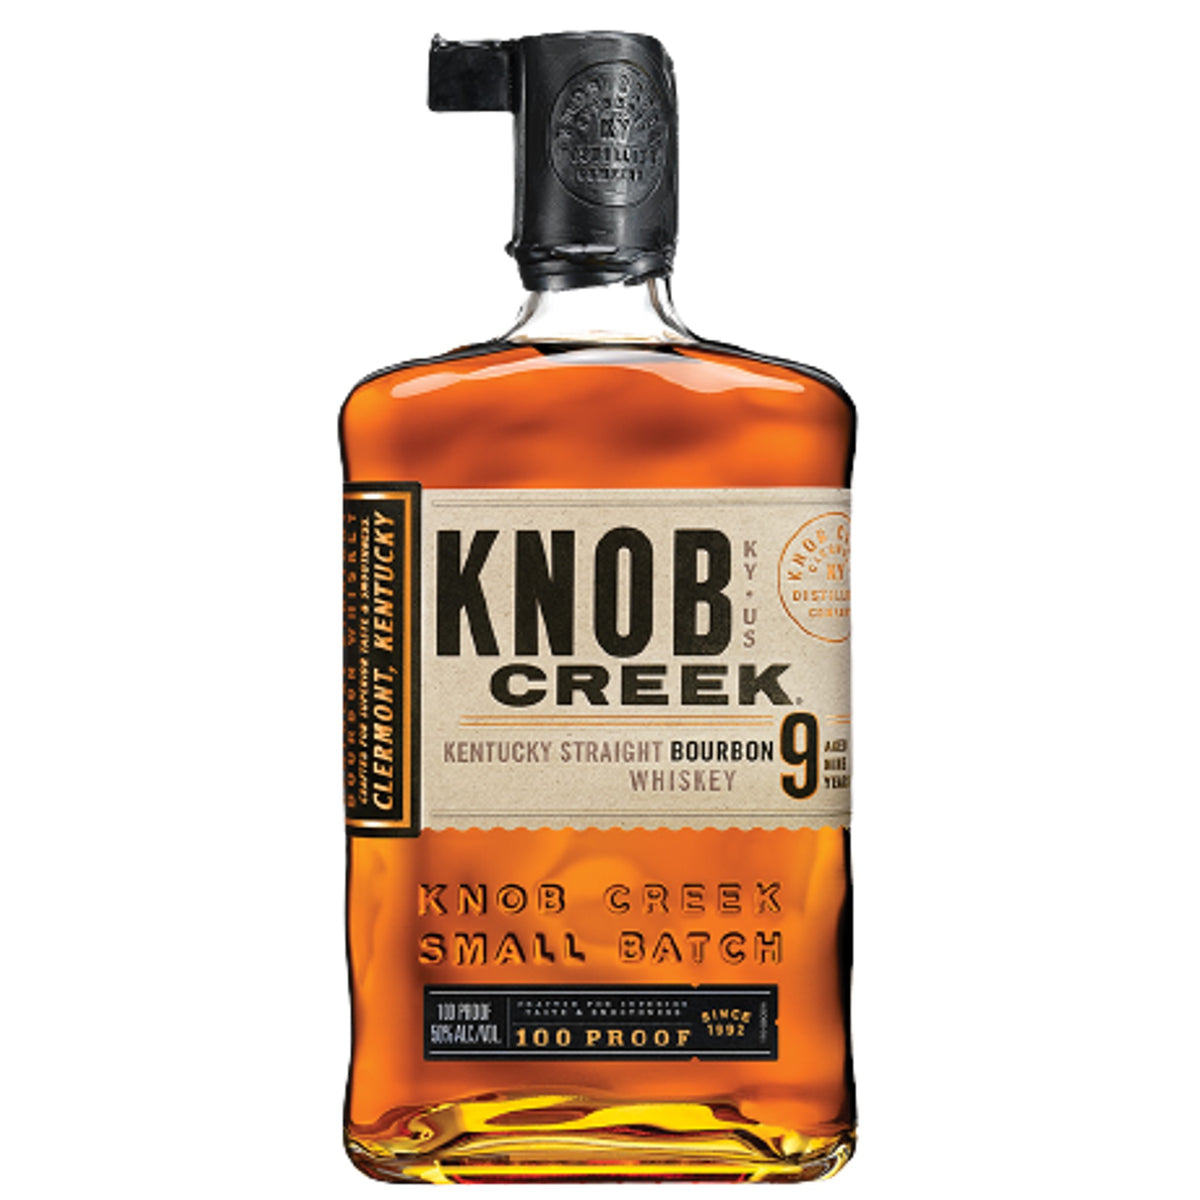 Knob Creek 9 Year Small Batch Kentucky Straight Bourbon Whiskey (750ml)